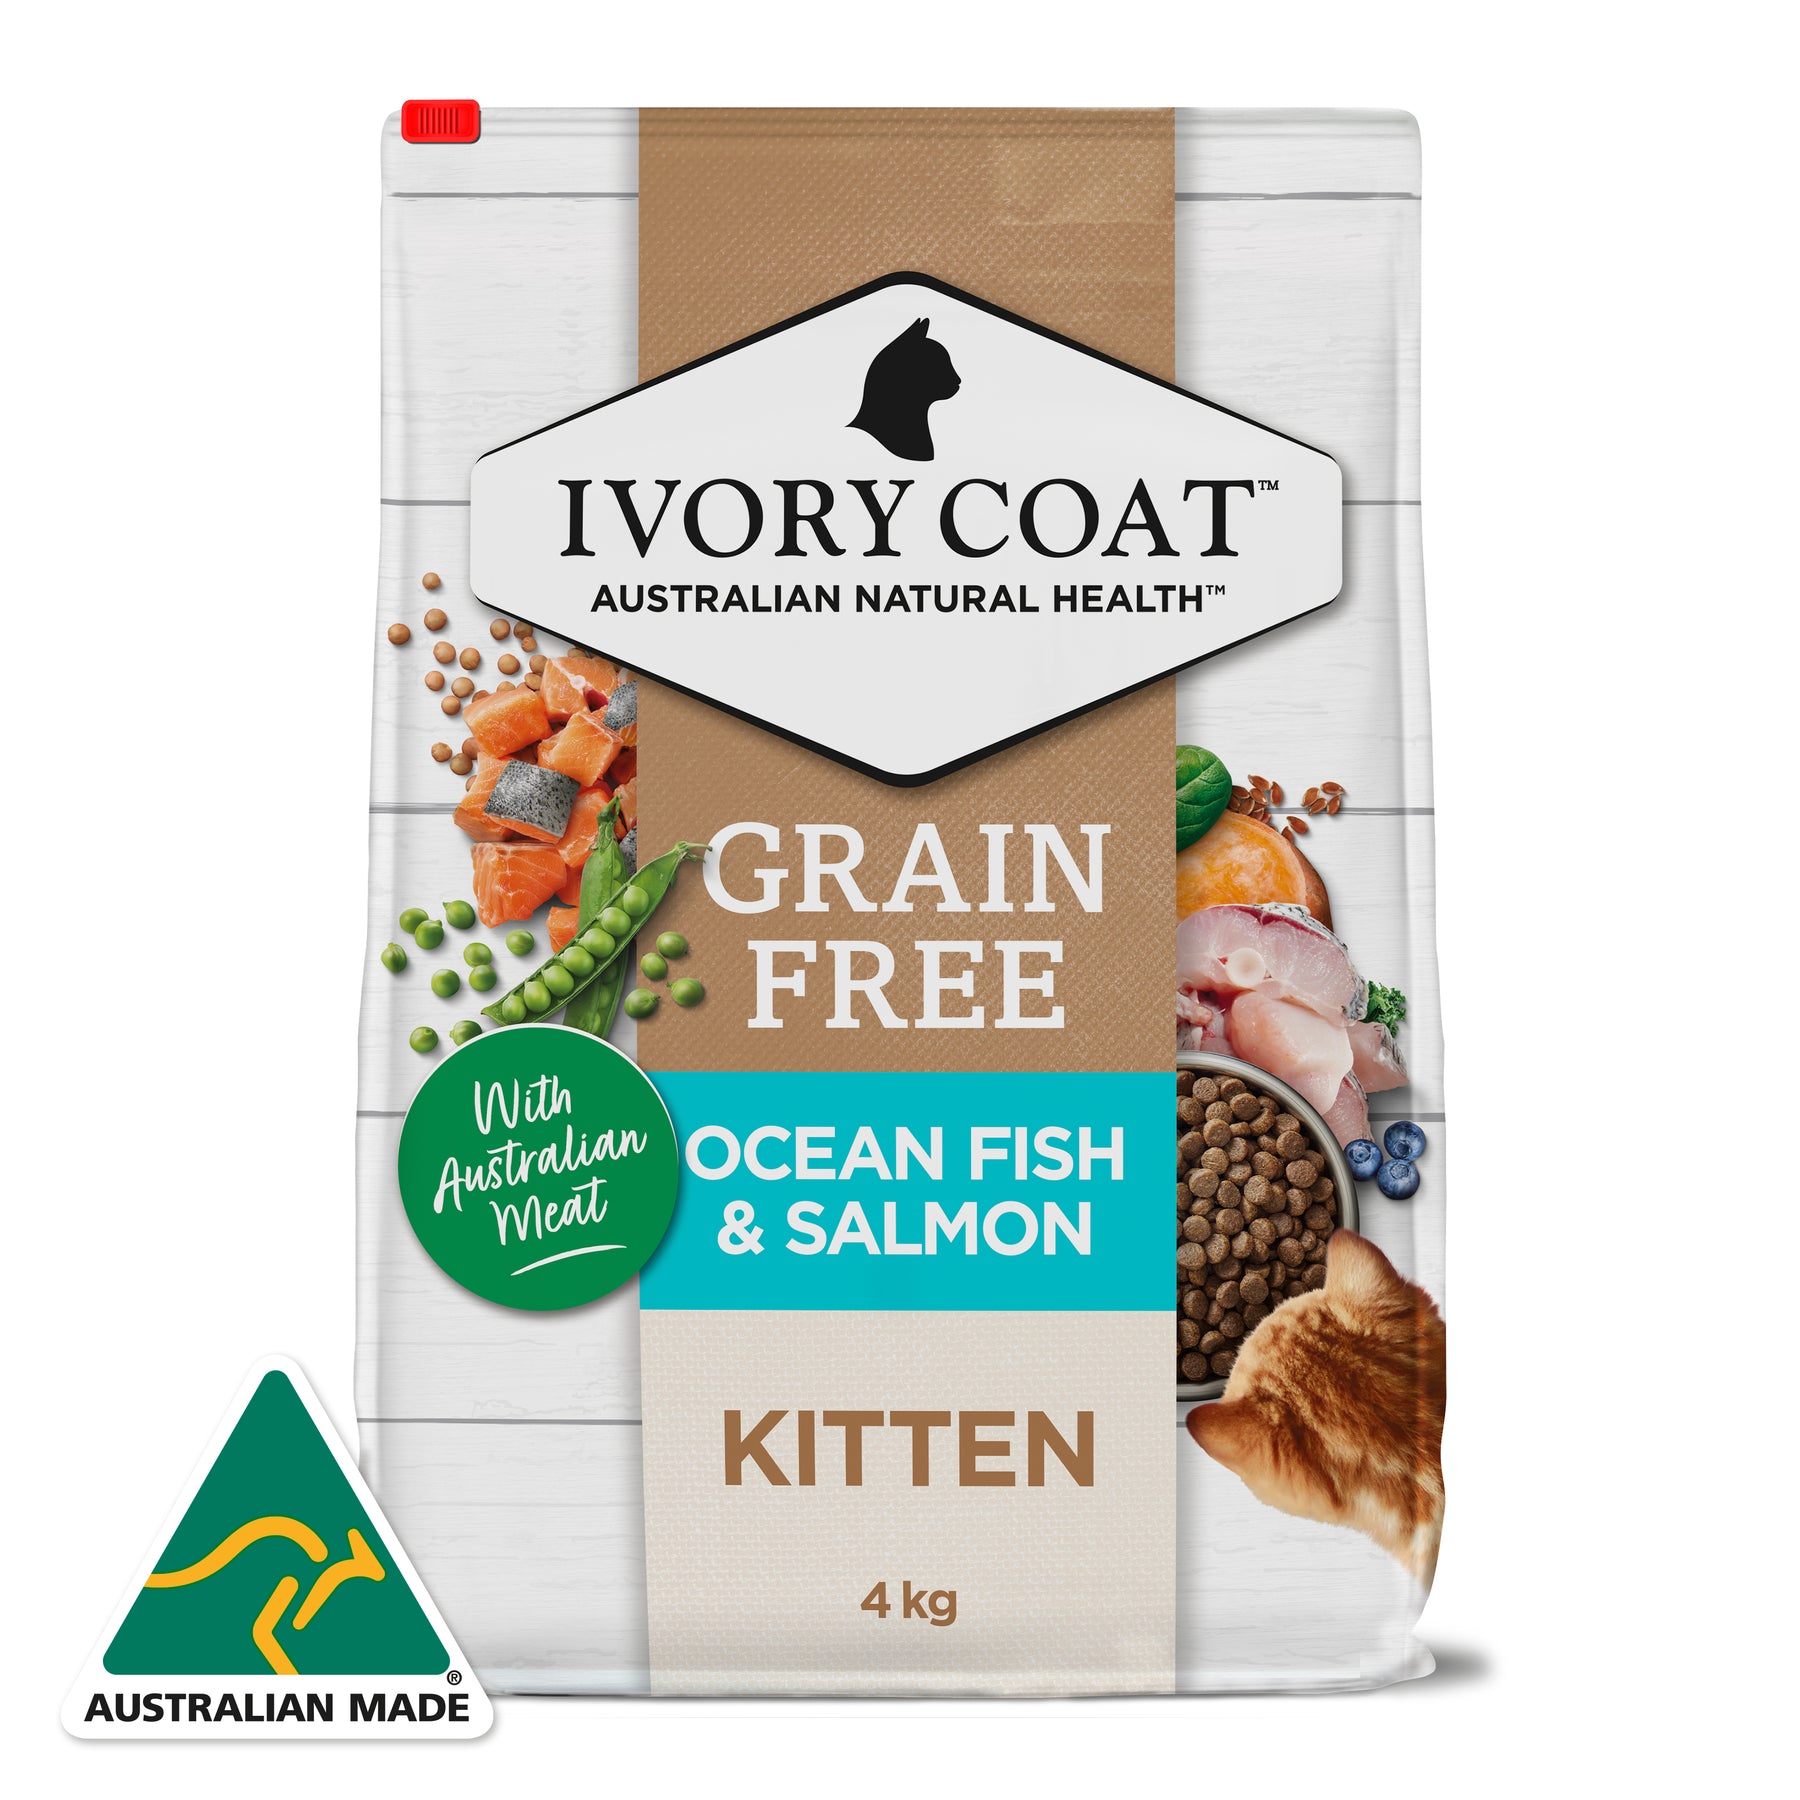 Grain Free Dry Kitten Food Ocean Fish & Salmon 2kg